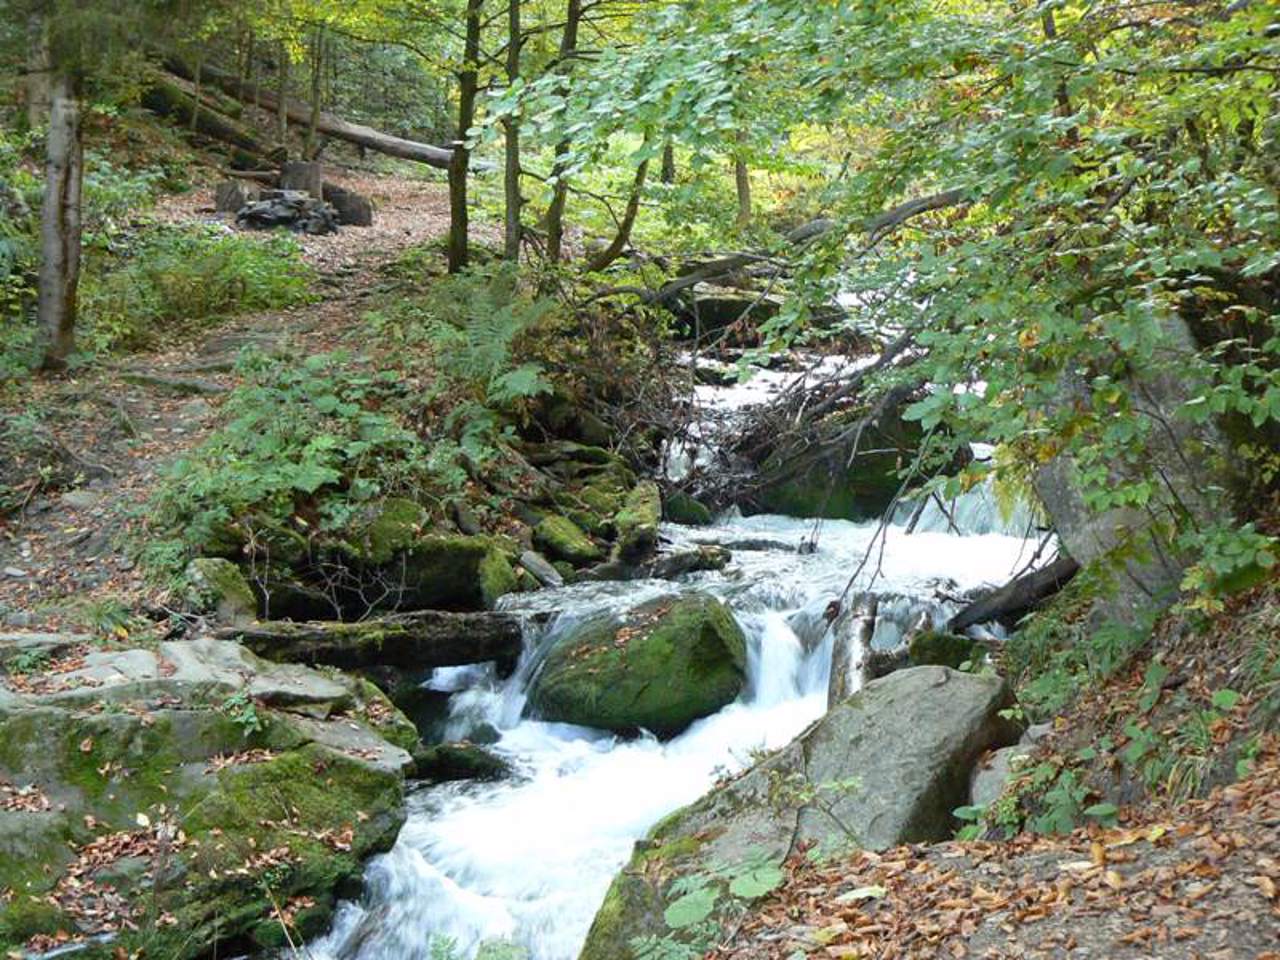 Voyevodyn Waterfall, Turya Poliana